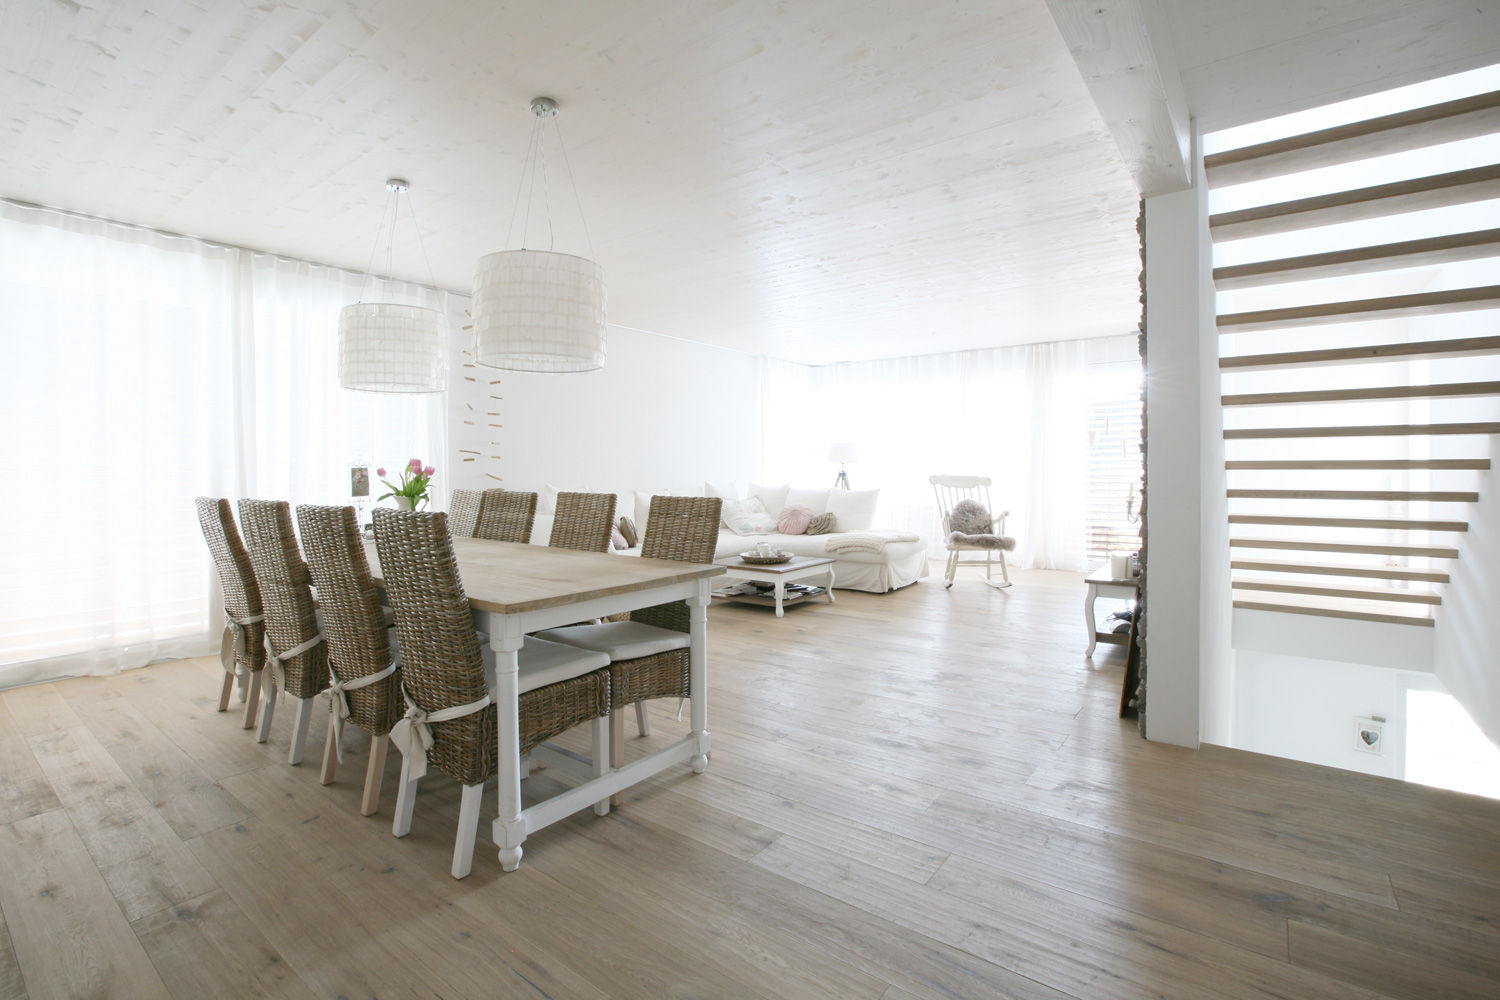 DFH Wängi, skizzenROLLE skizzenROLLE Country style living room